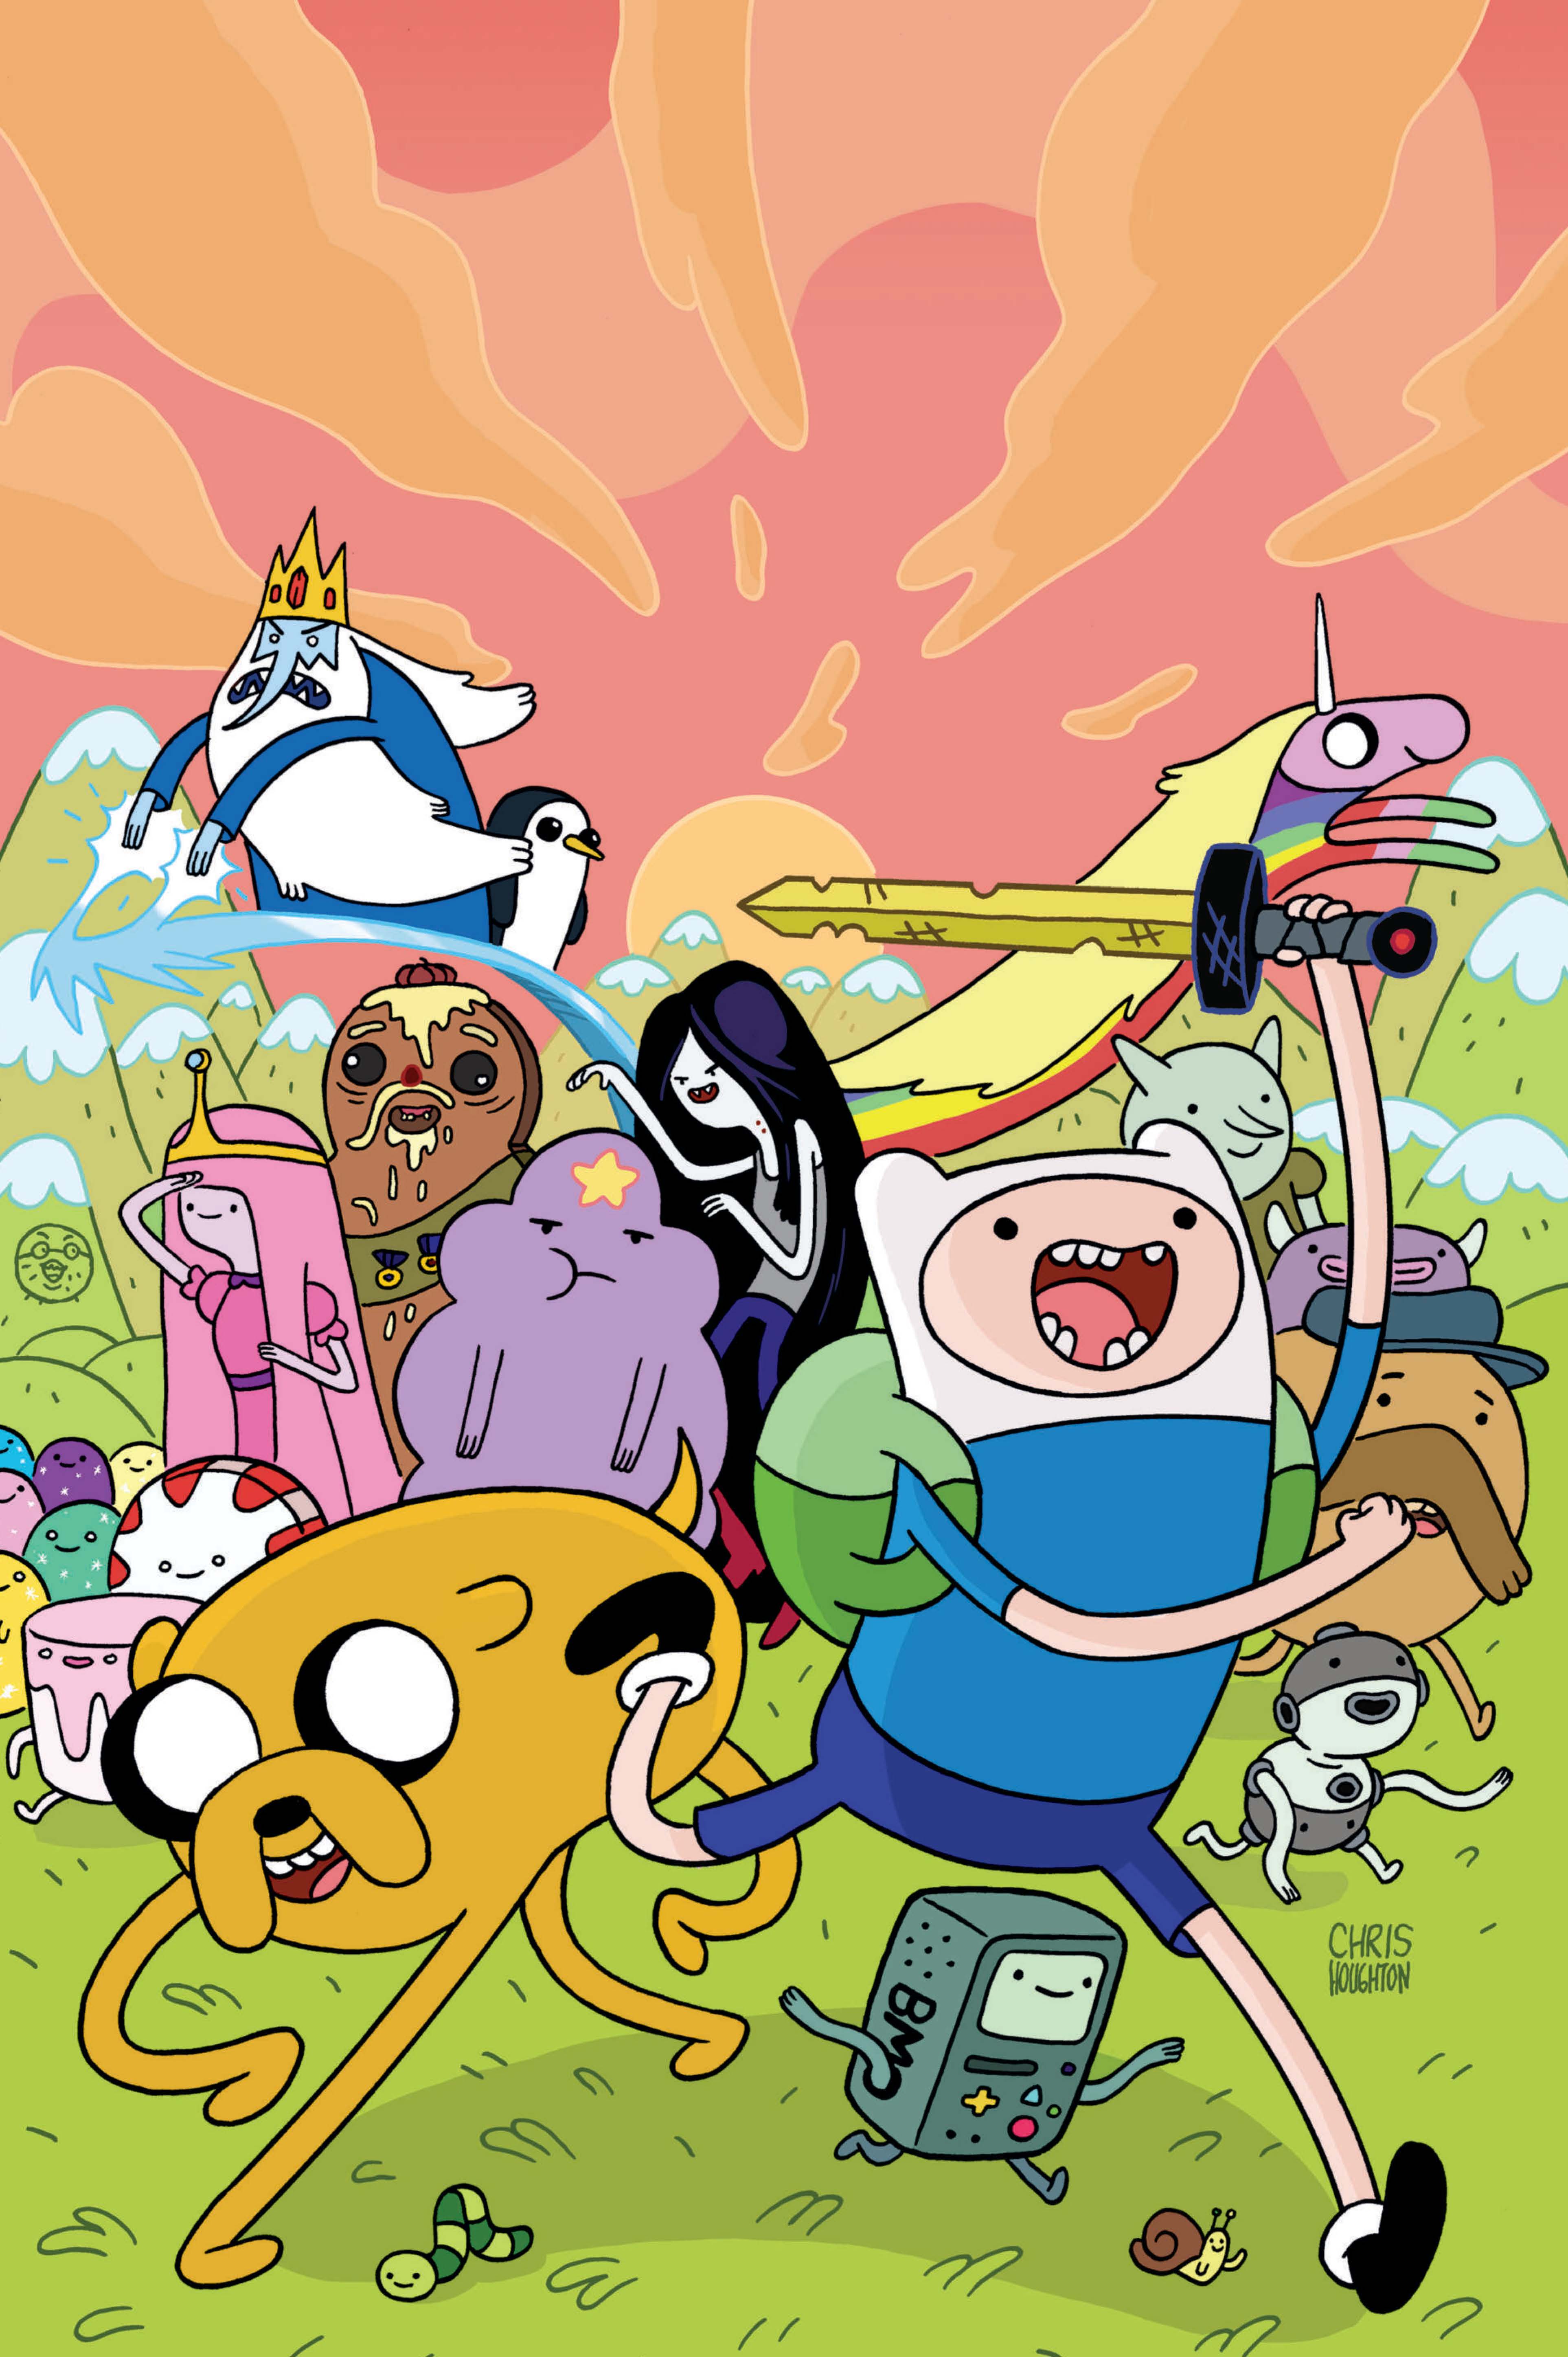 Историю про приключения. Adventure time Финн и Джейк. Комиксы адвентуре тайм.